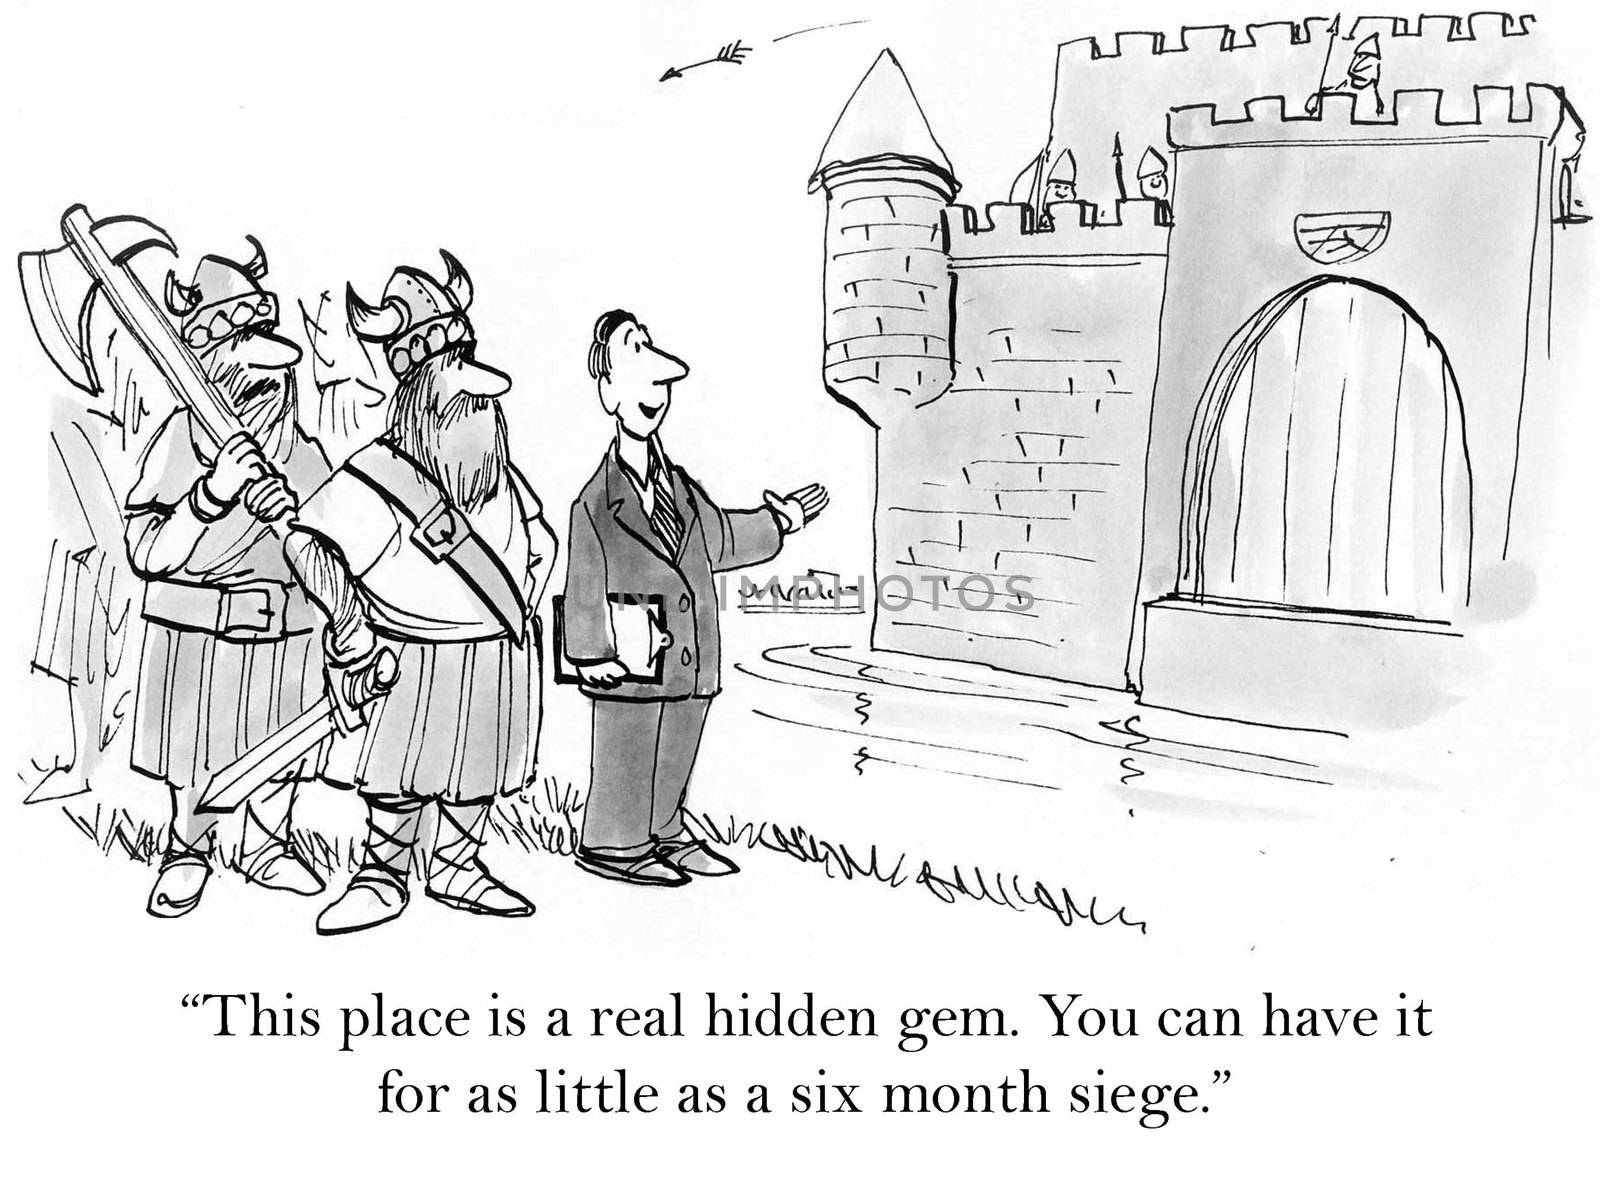 Six month siege by andrewgenn